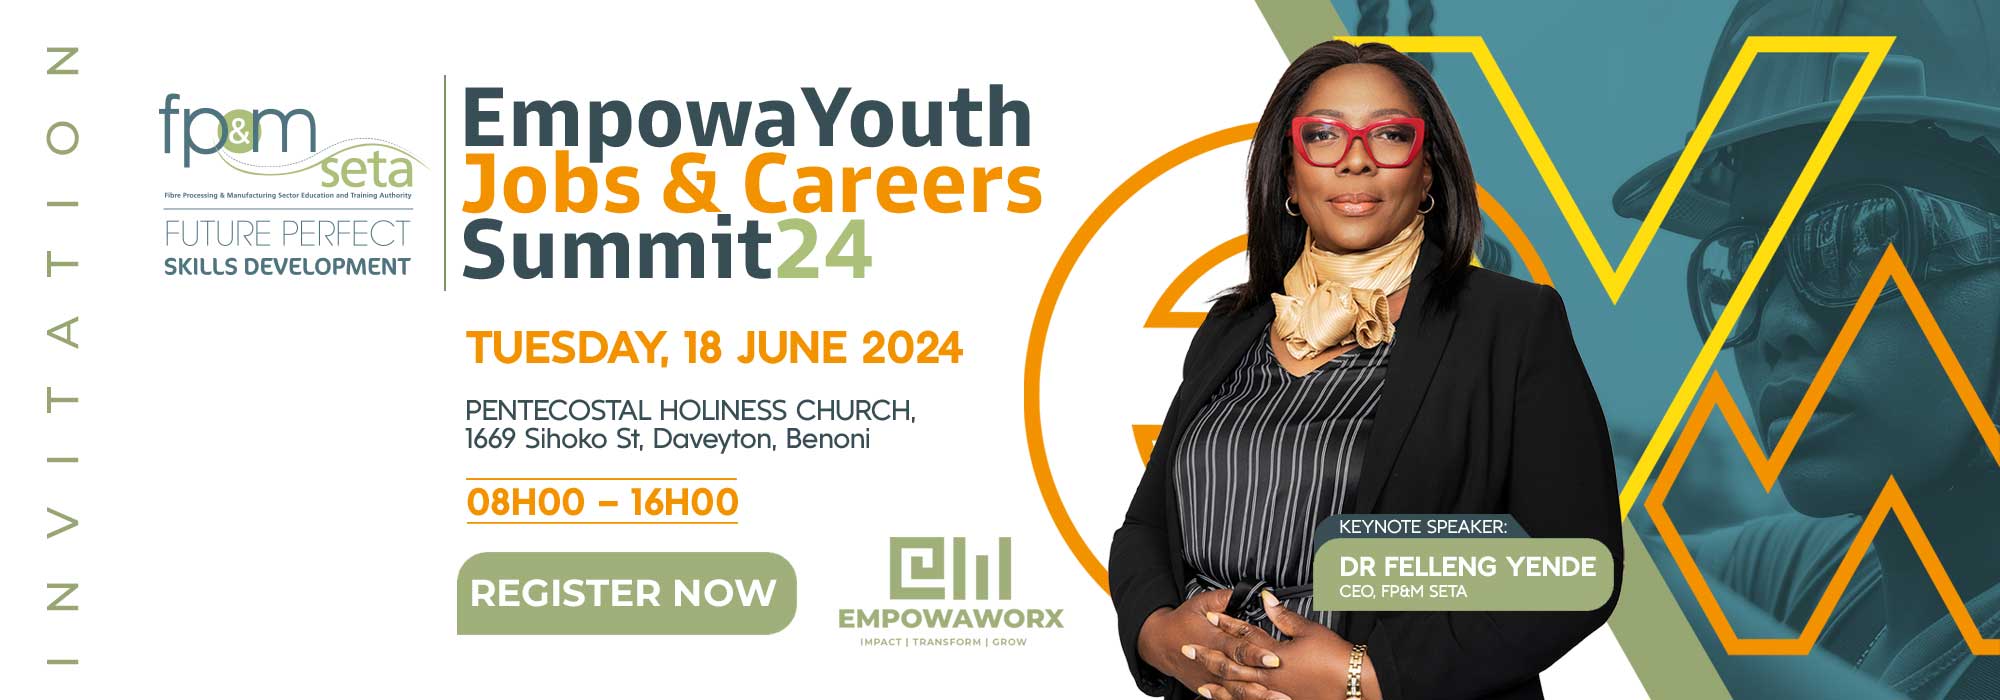 EmpowaYouth Jobs & Careers Summit24